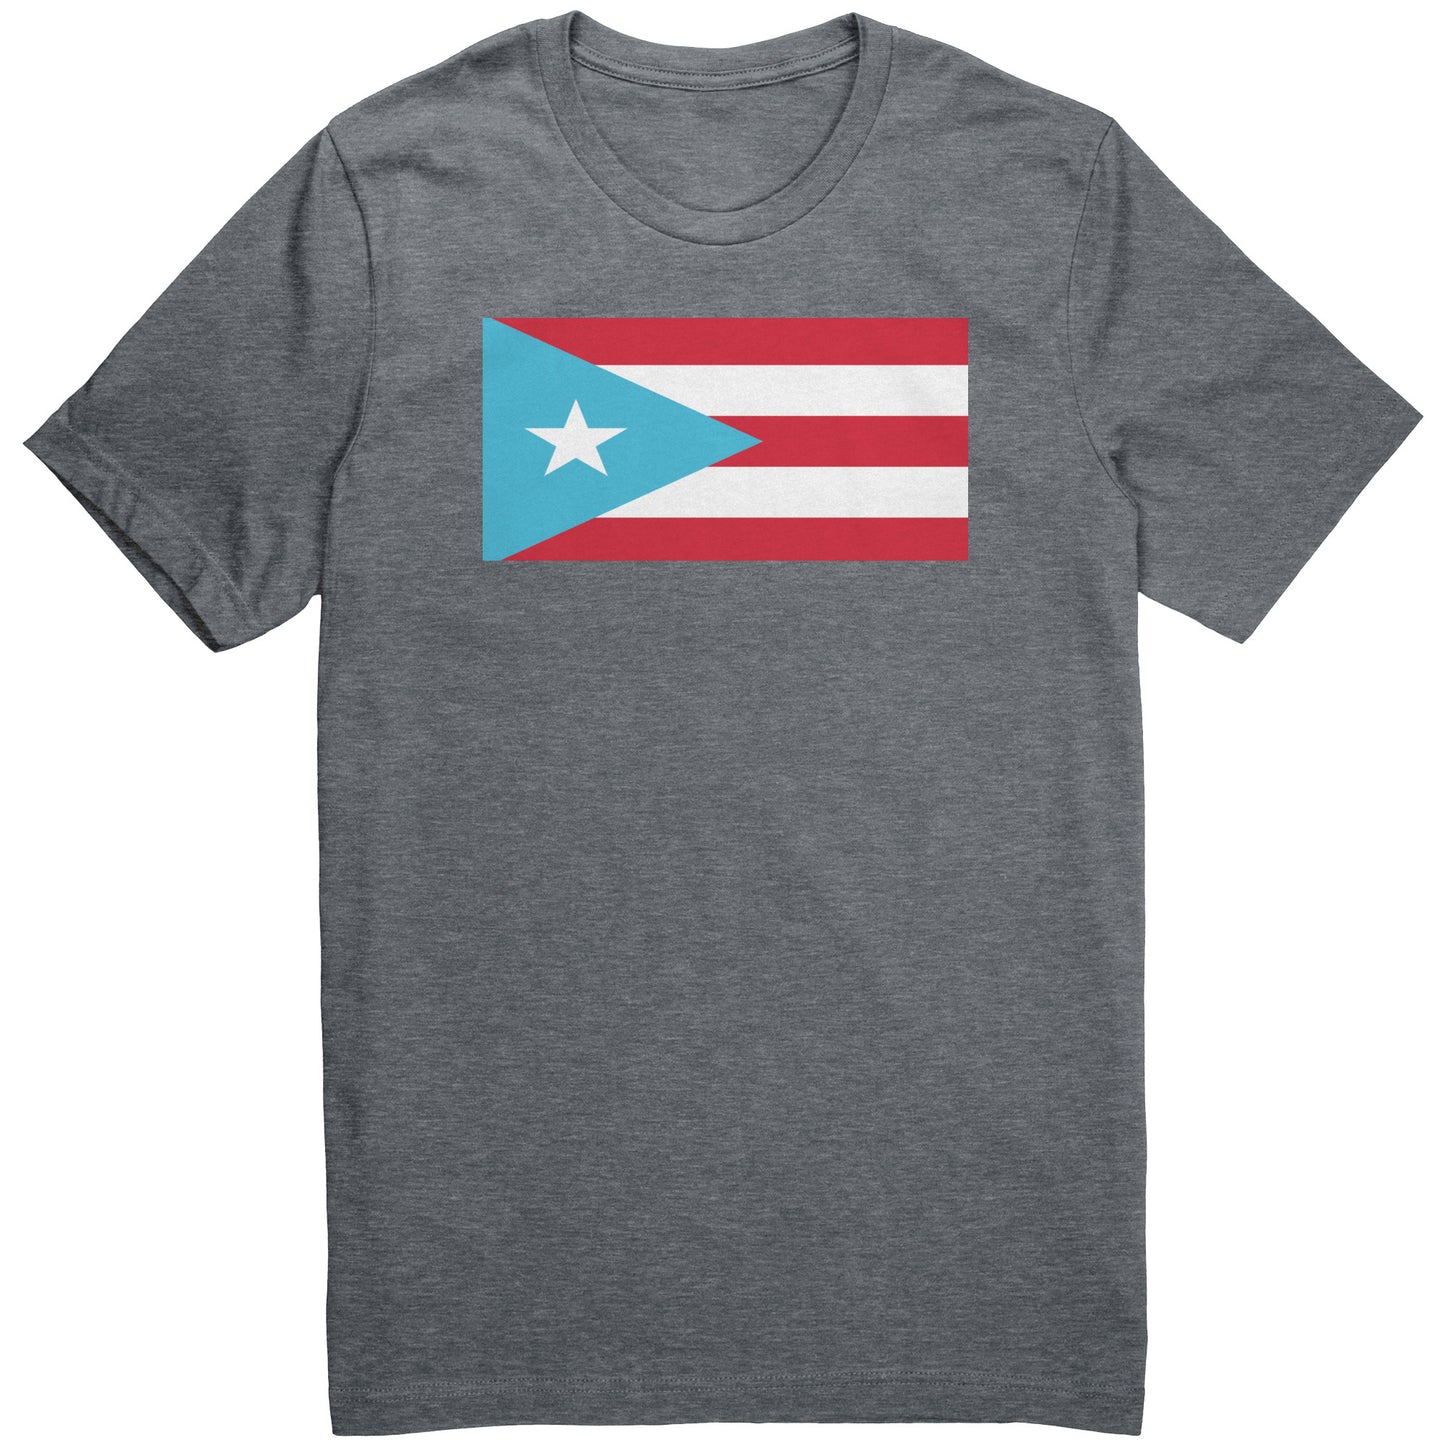 Light blue Puerto Rican flag